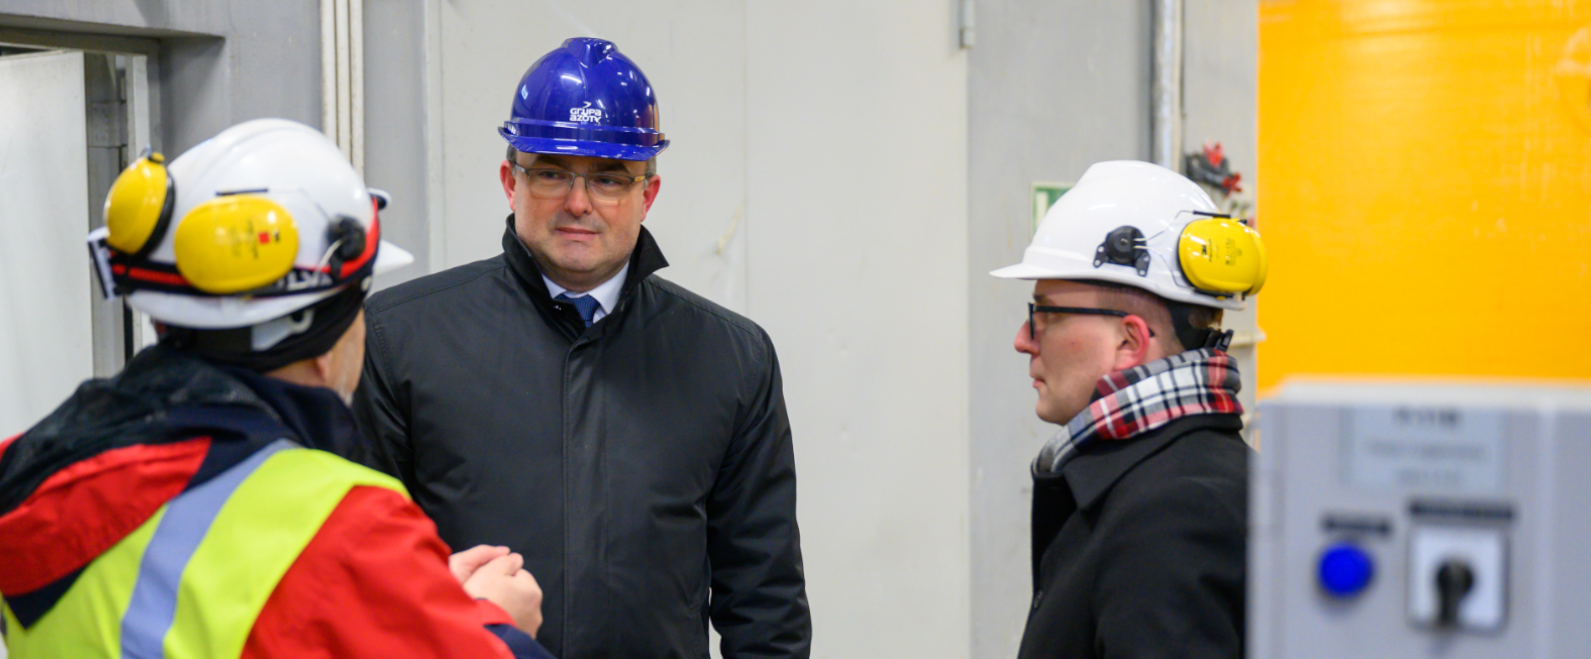 Commissioning of flue gas desulphurisation plant at Grupa Azoty